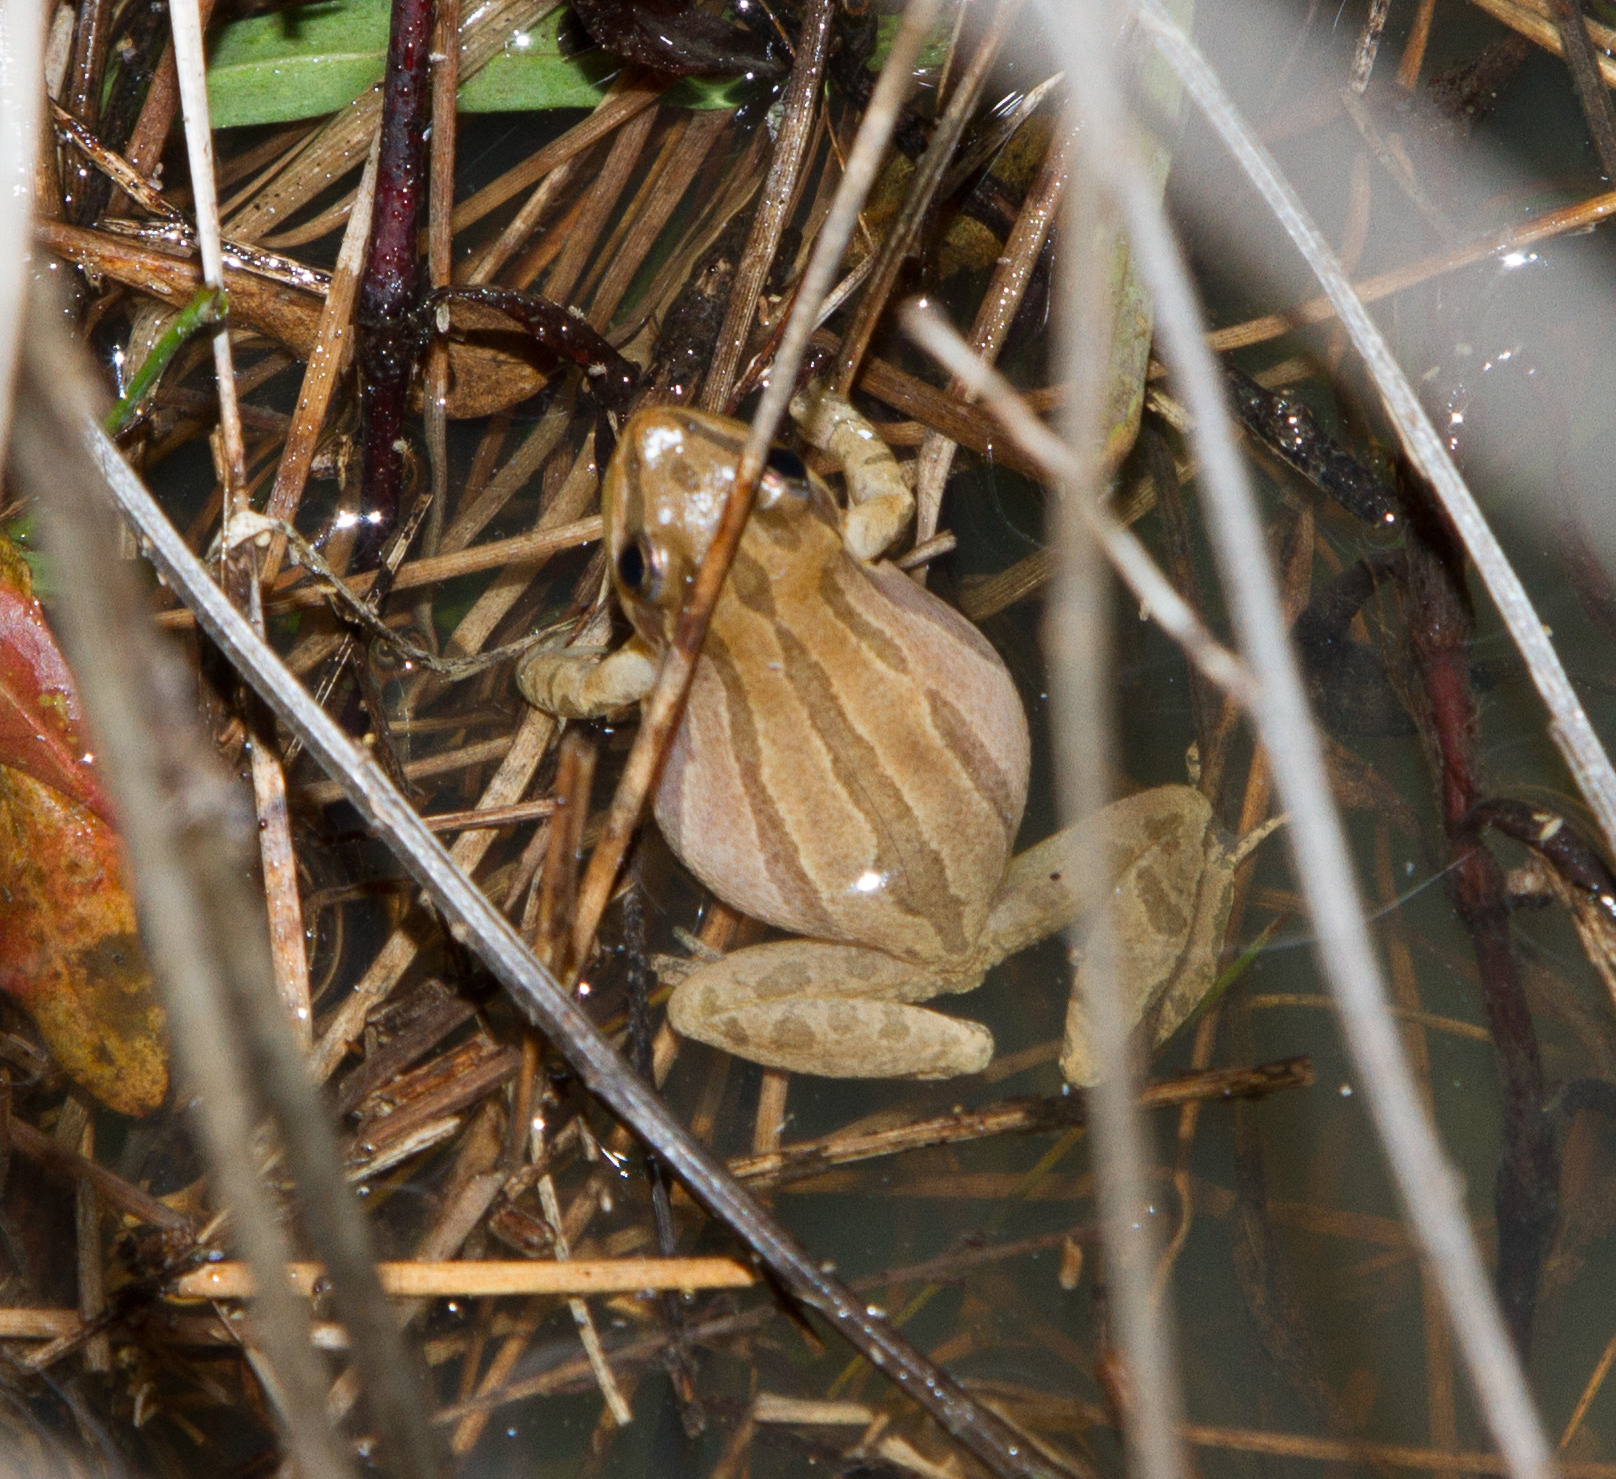 Image of Cajun Chorus Frog